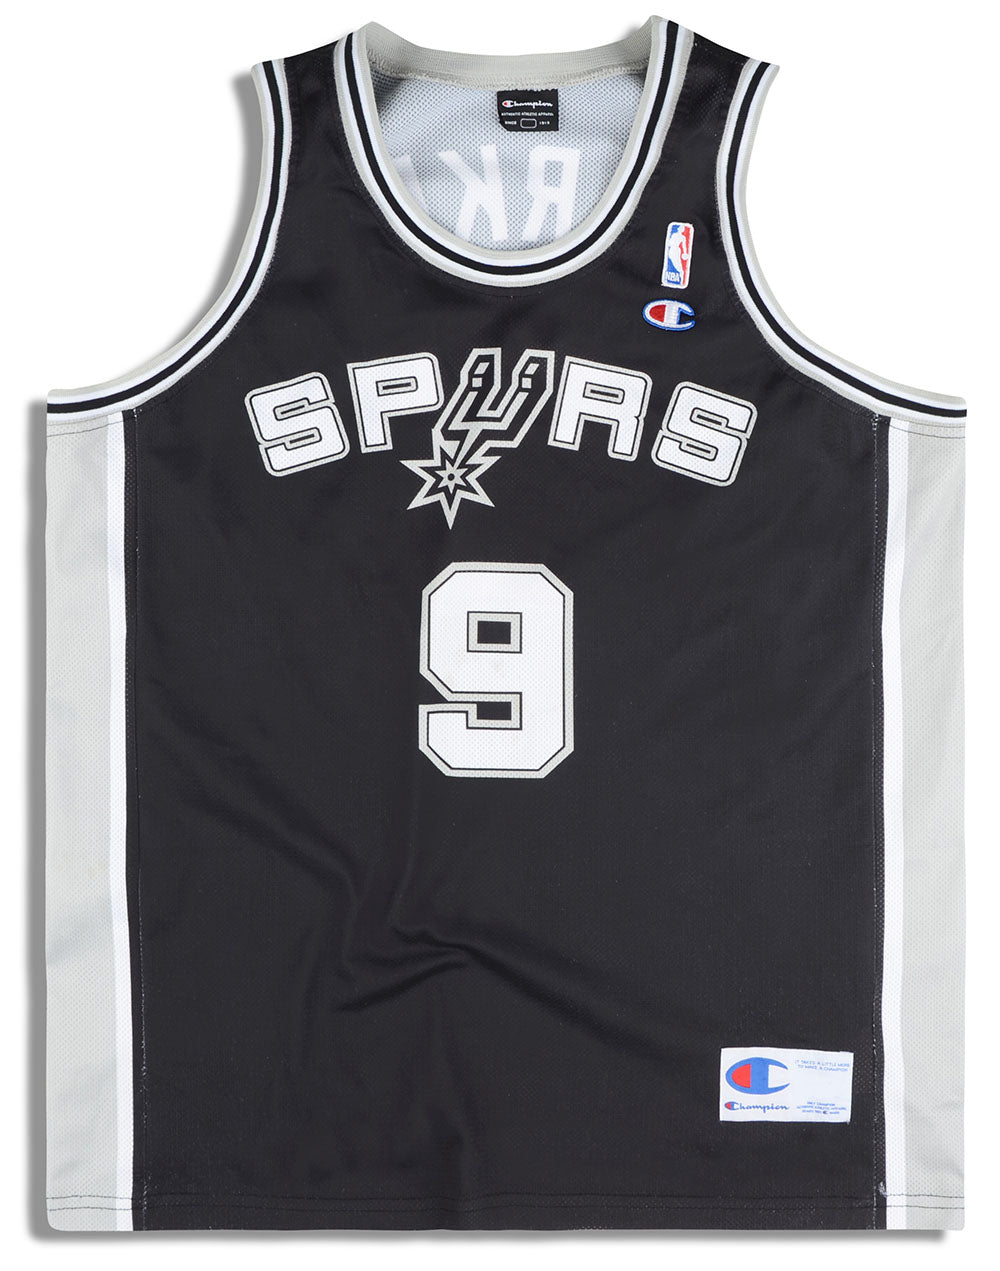 NBA San Antonio Spurs Black Swingman Jersey Tony Parker #9, Large